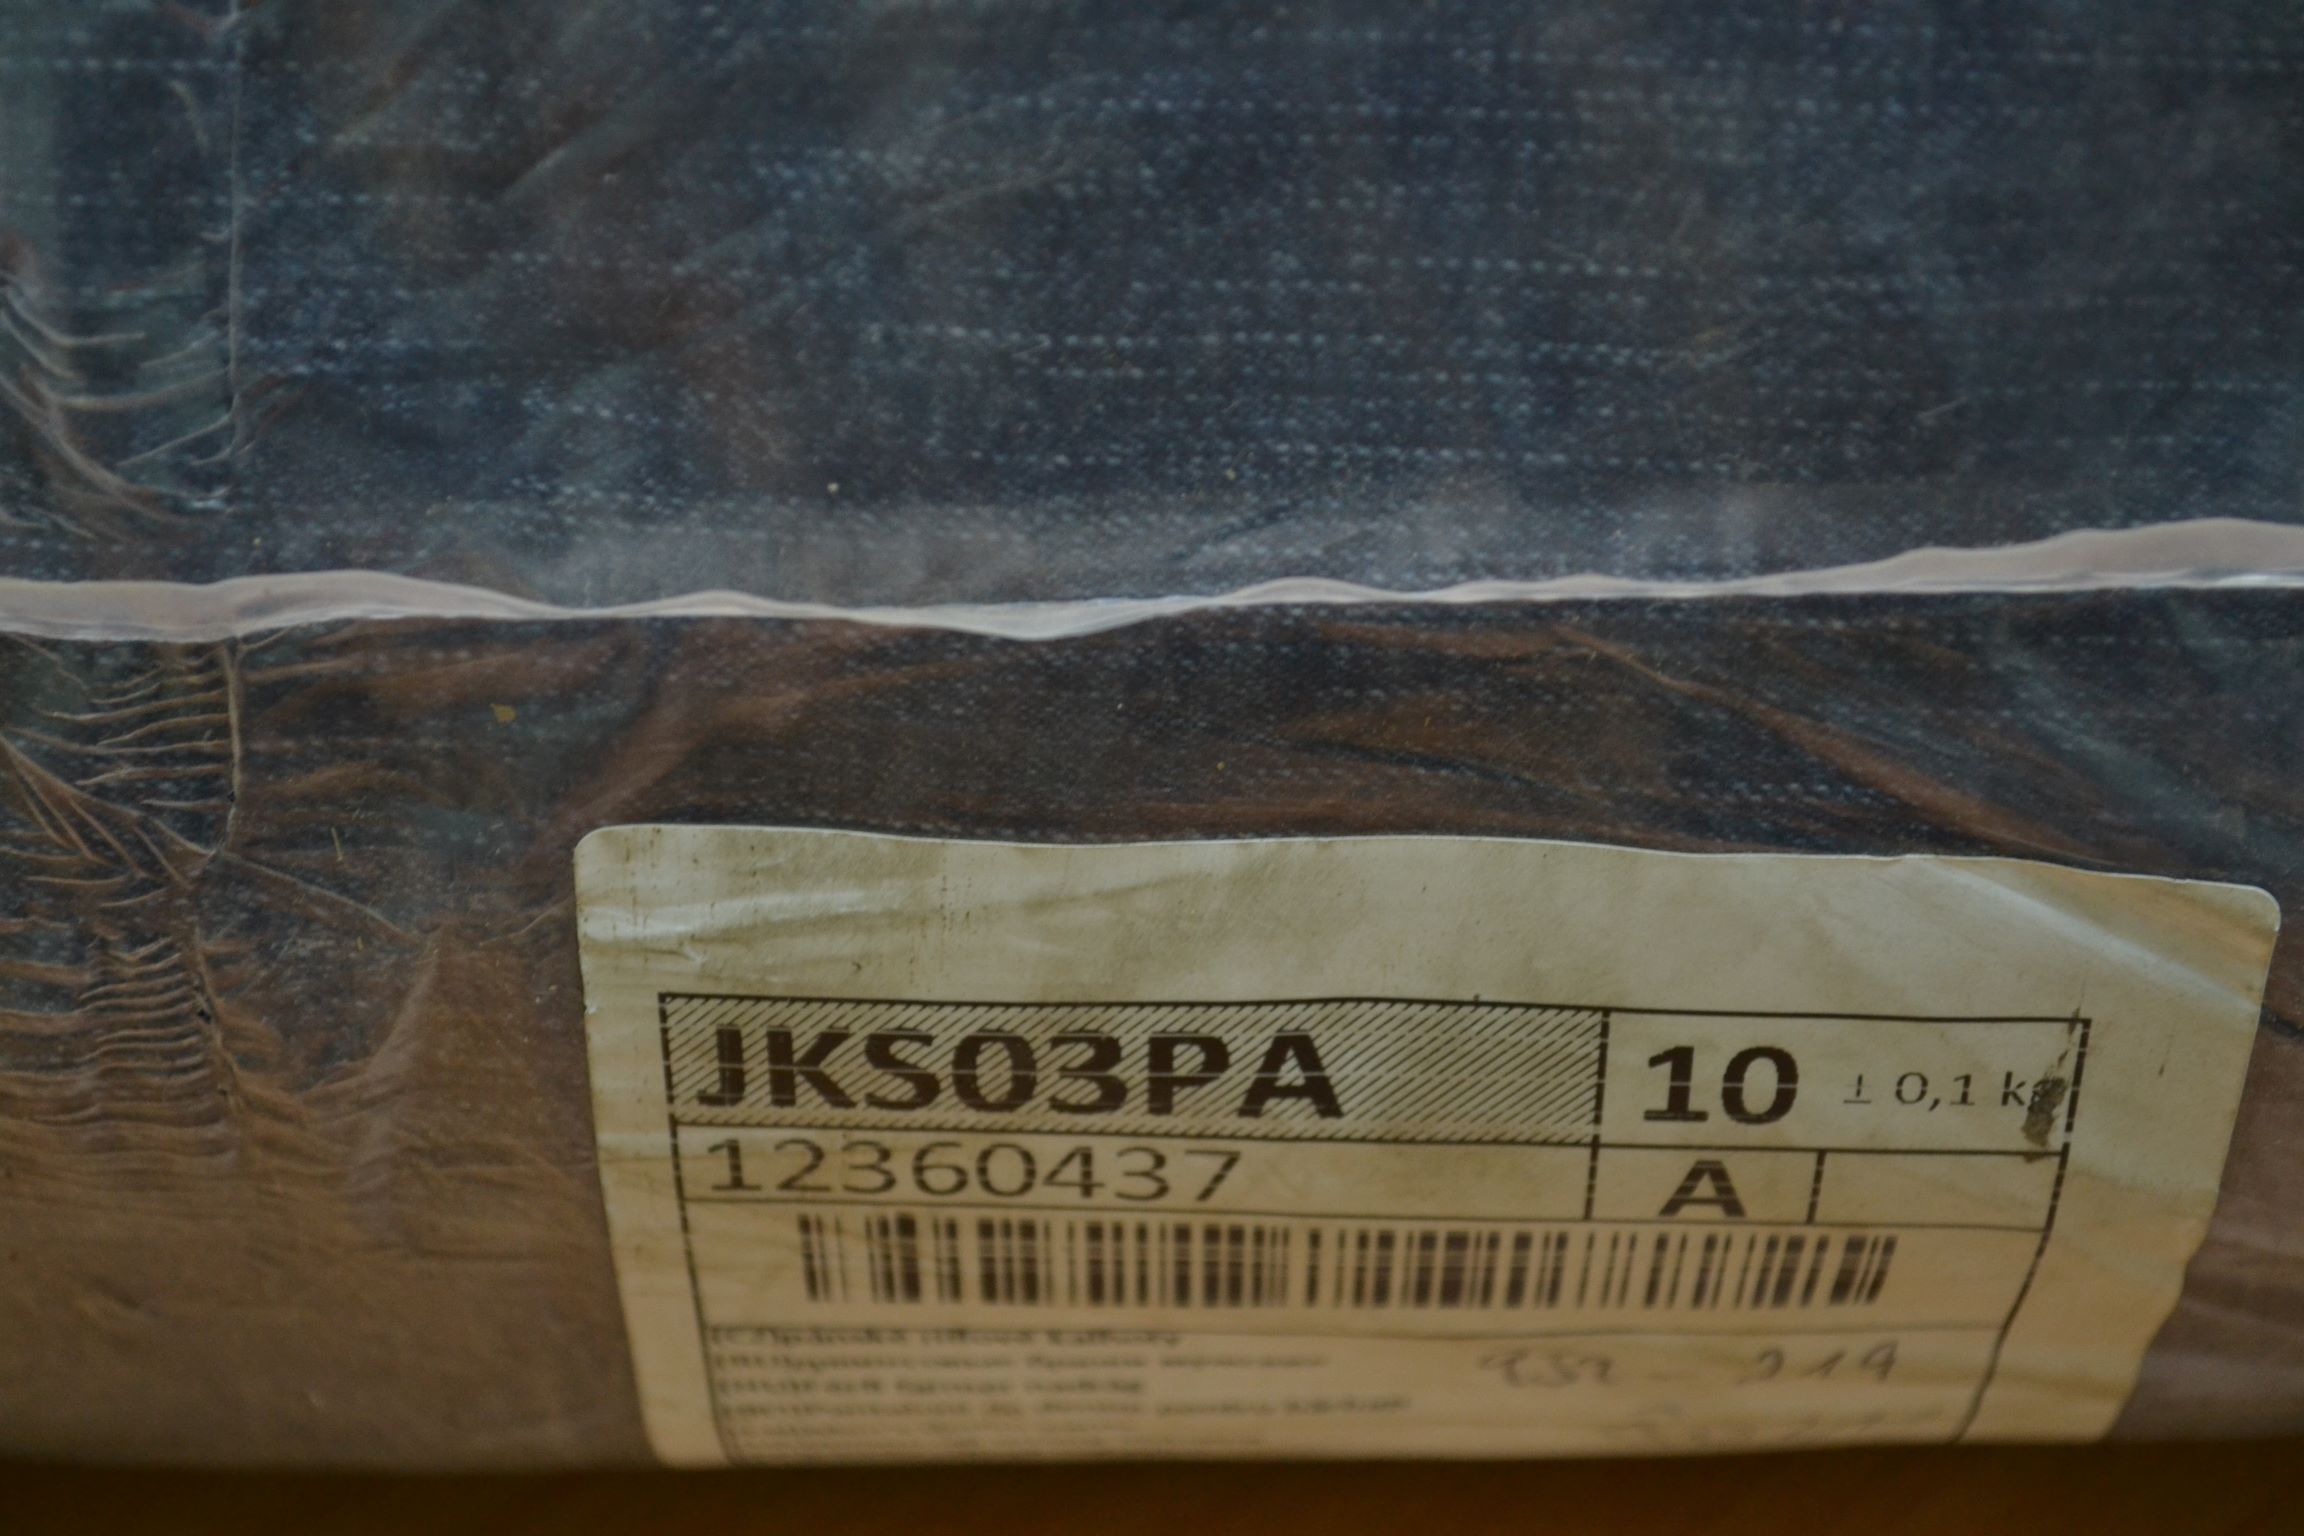 JKS03PA Джинсовые брюки мужские ; код мешка 12360437